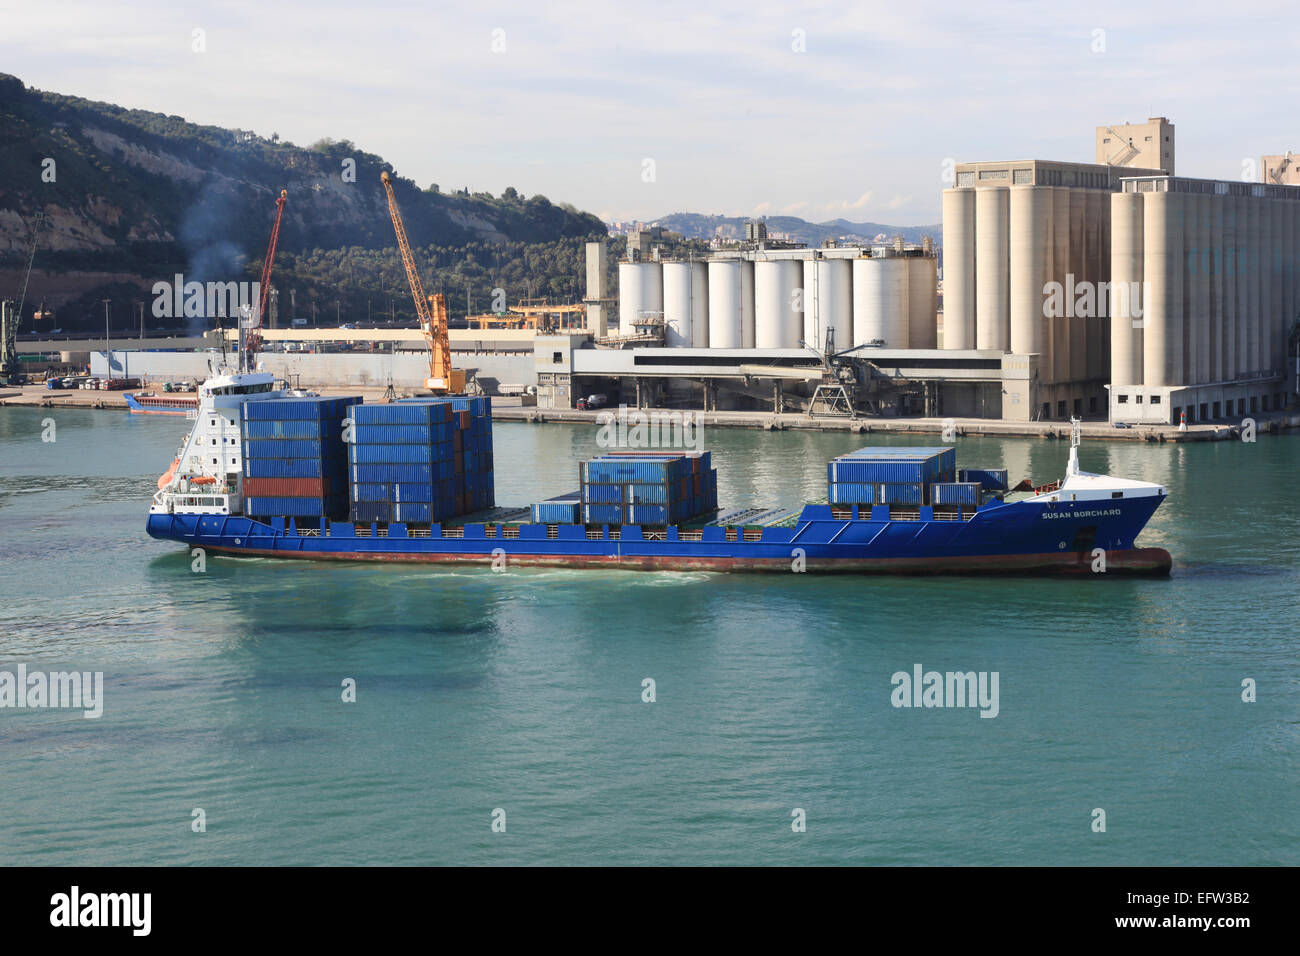 Container ship Susan Borchard Stock Photo